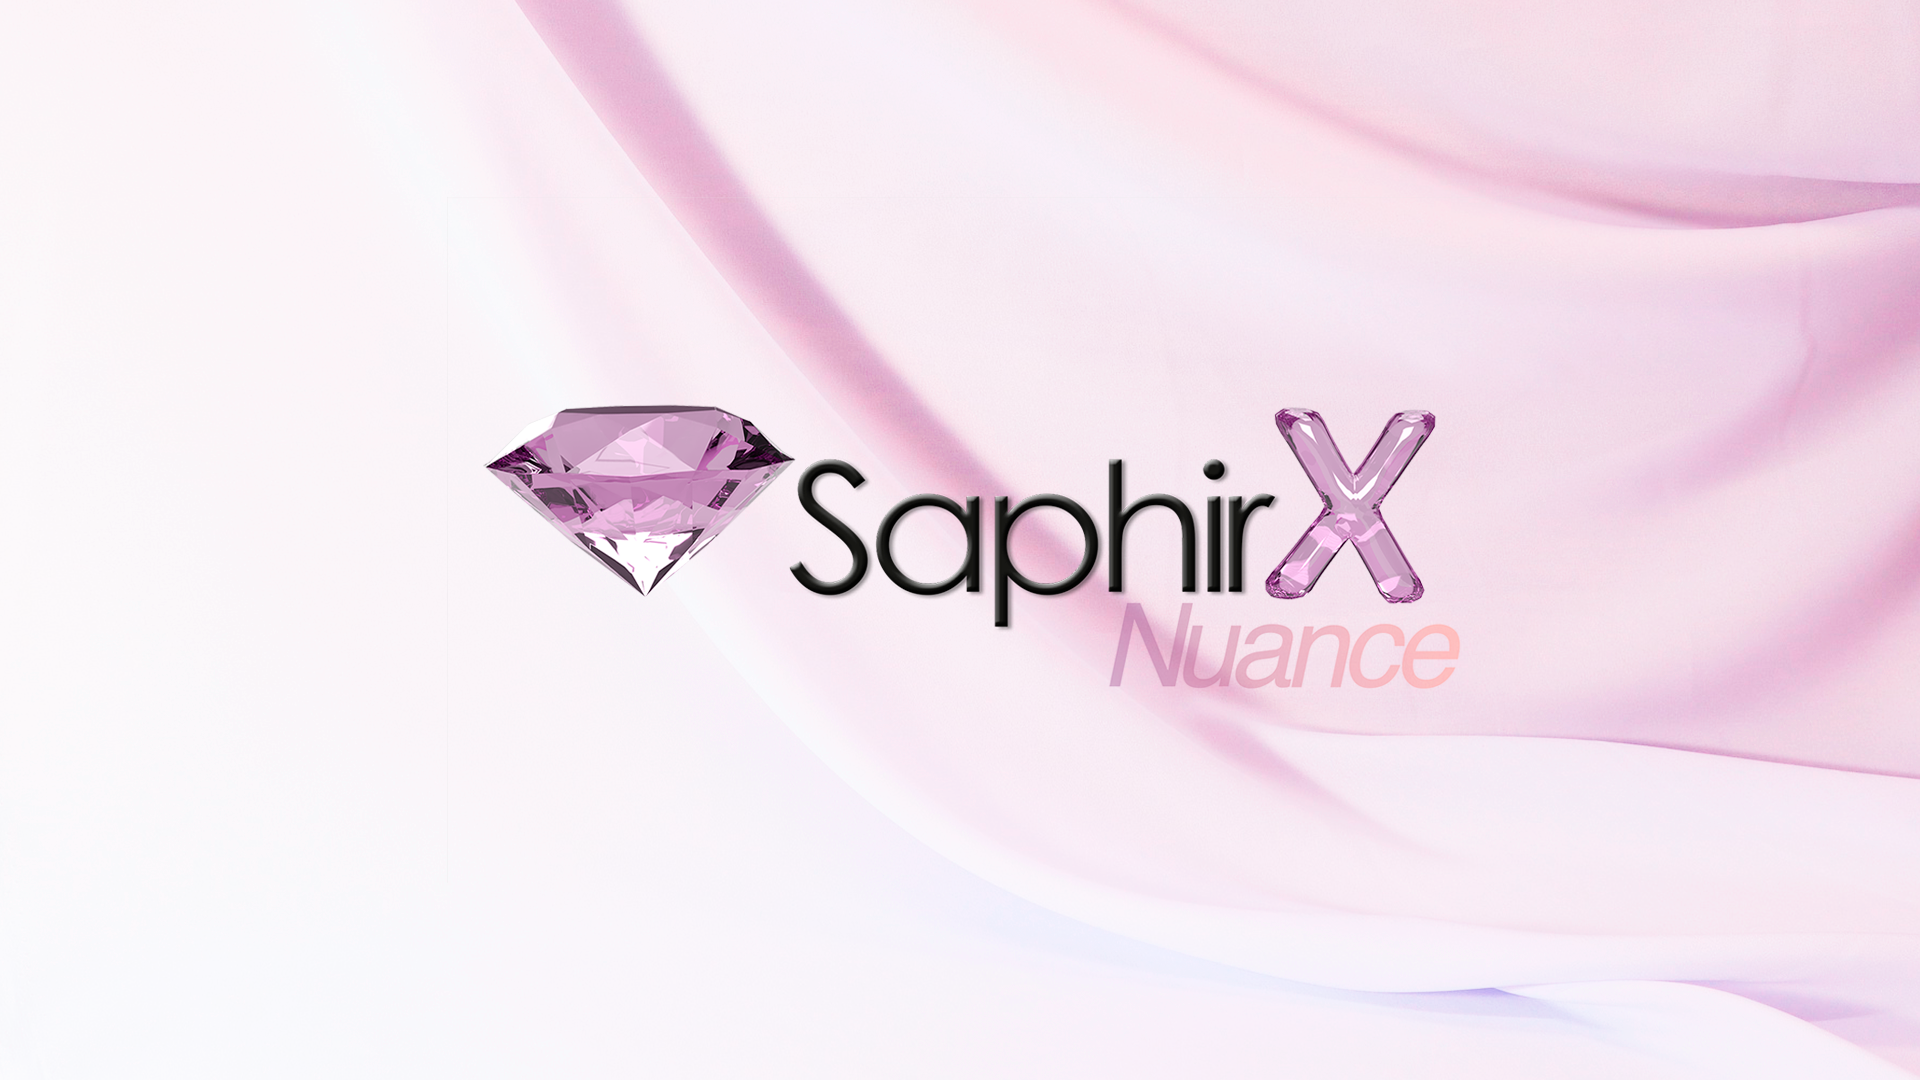 Saphirx Nuance